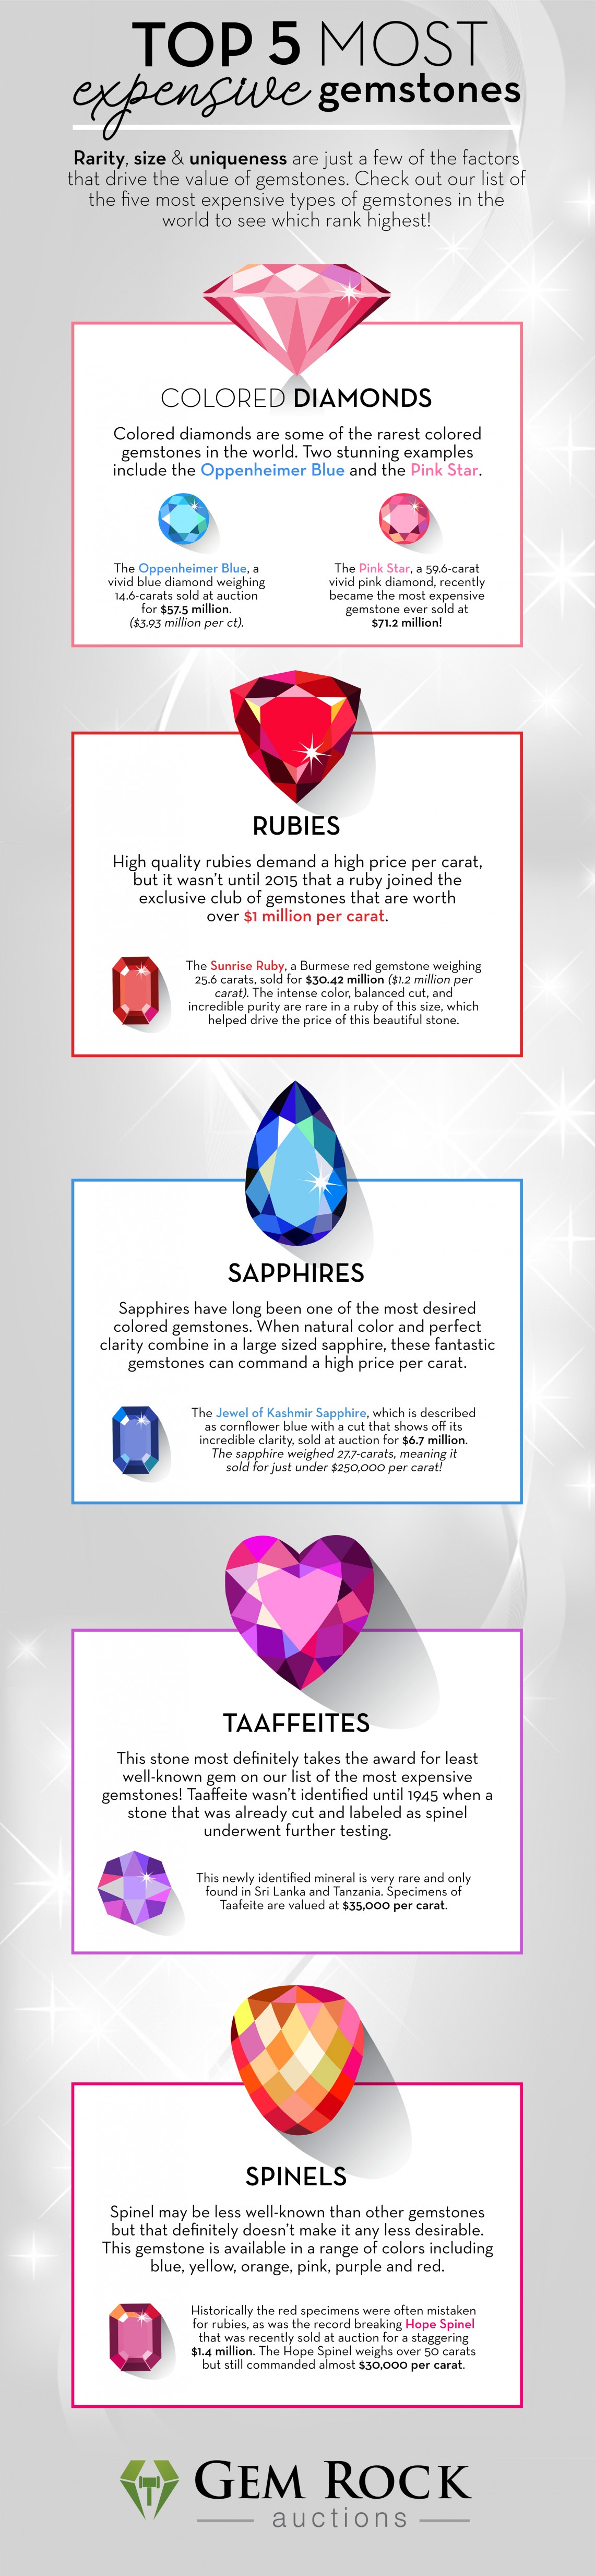 Top 5 Most Expensive Gemstones